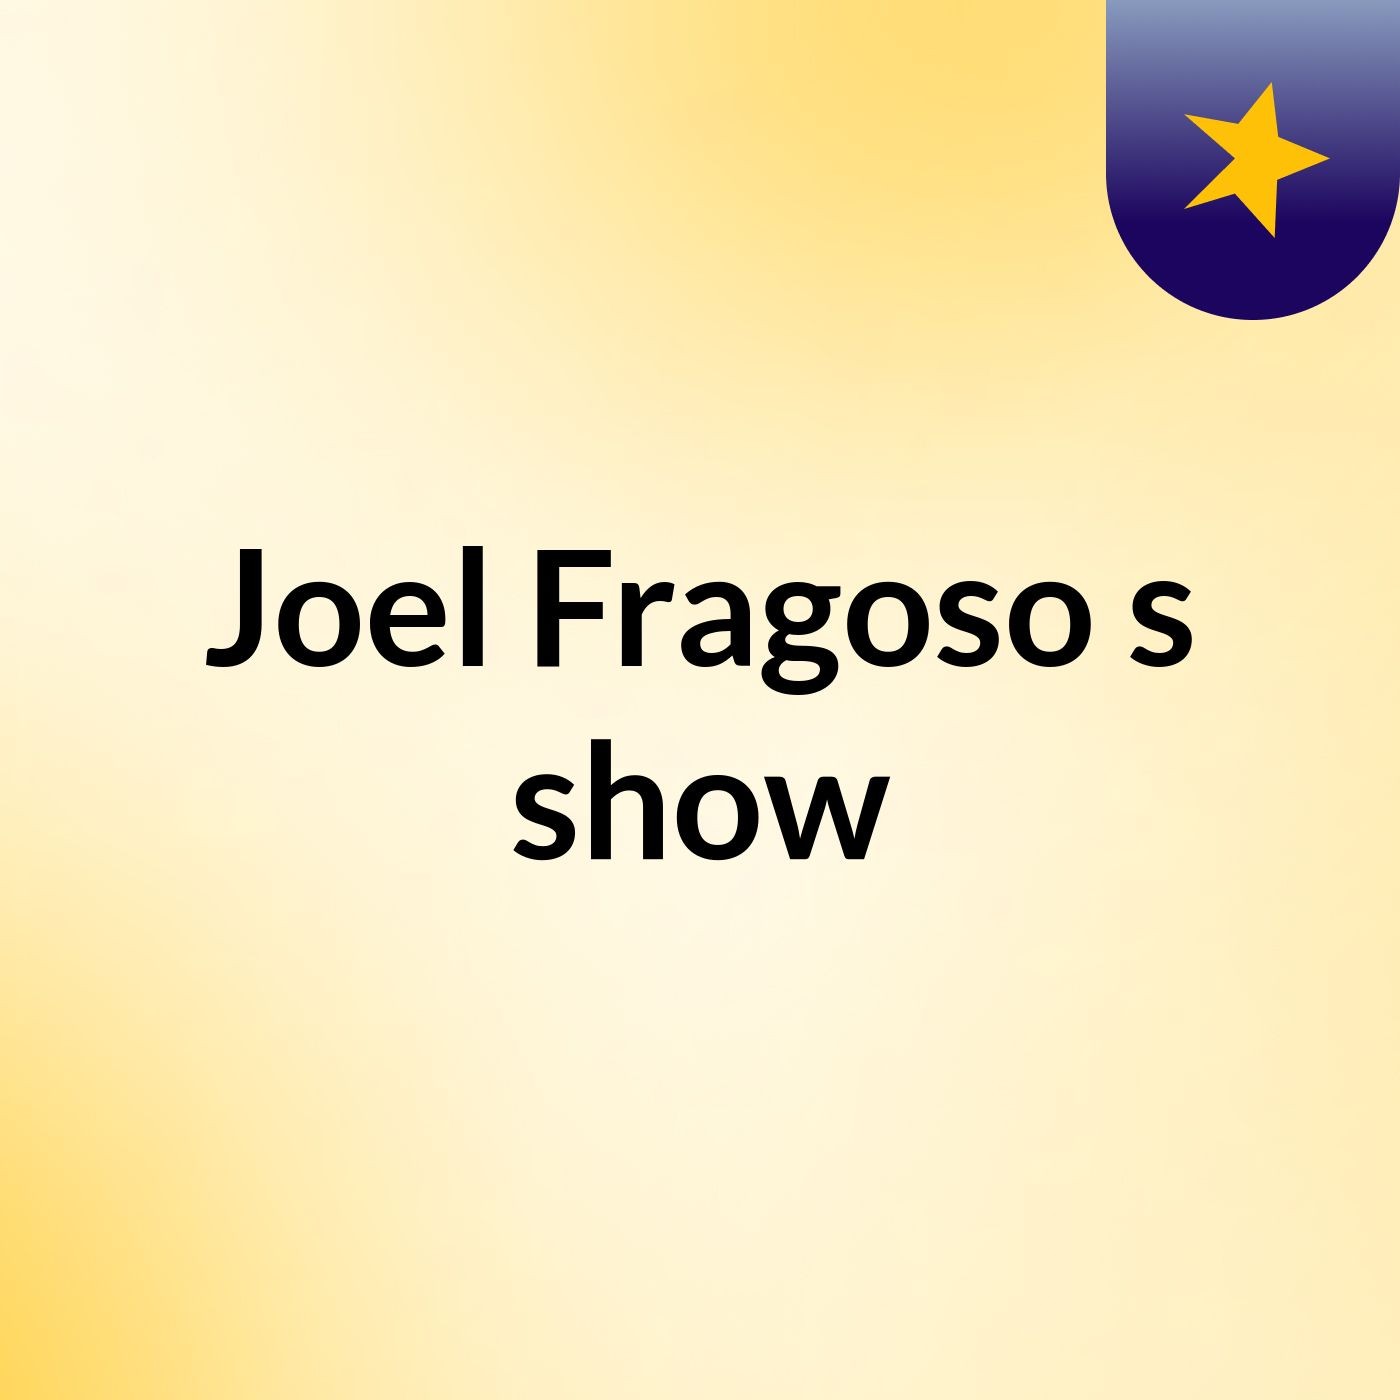 Joel Fragoso's show